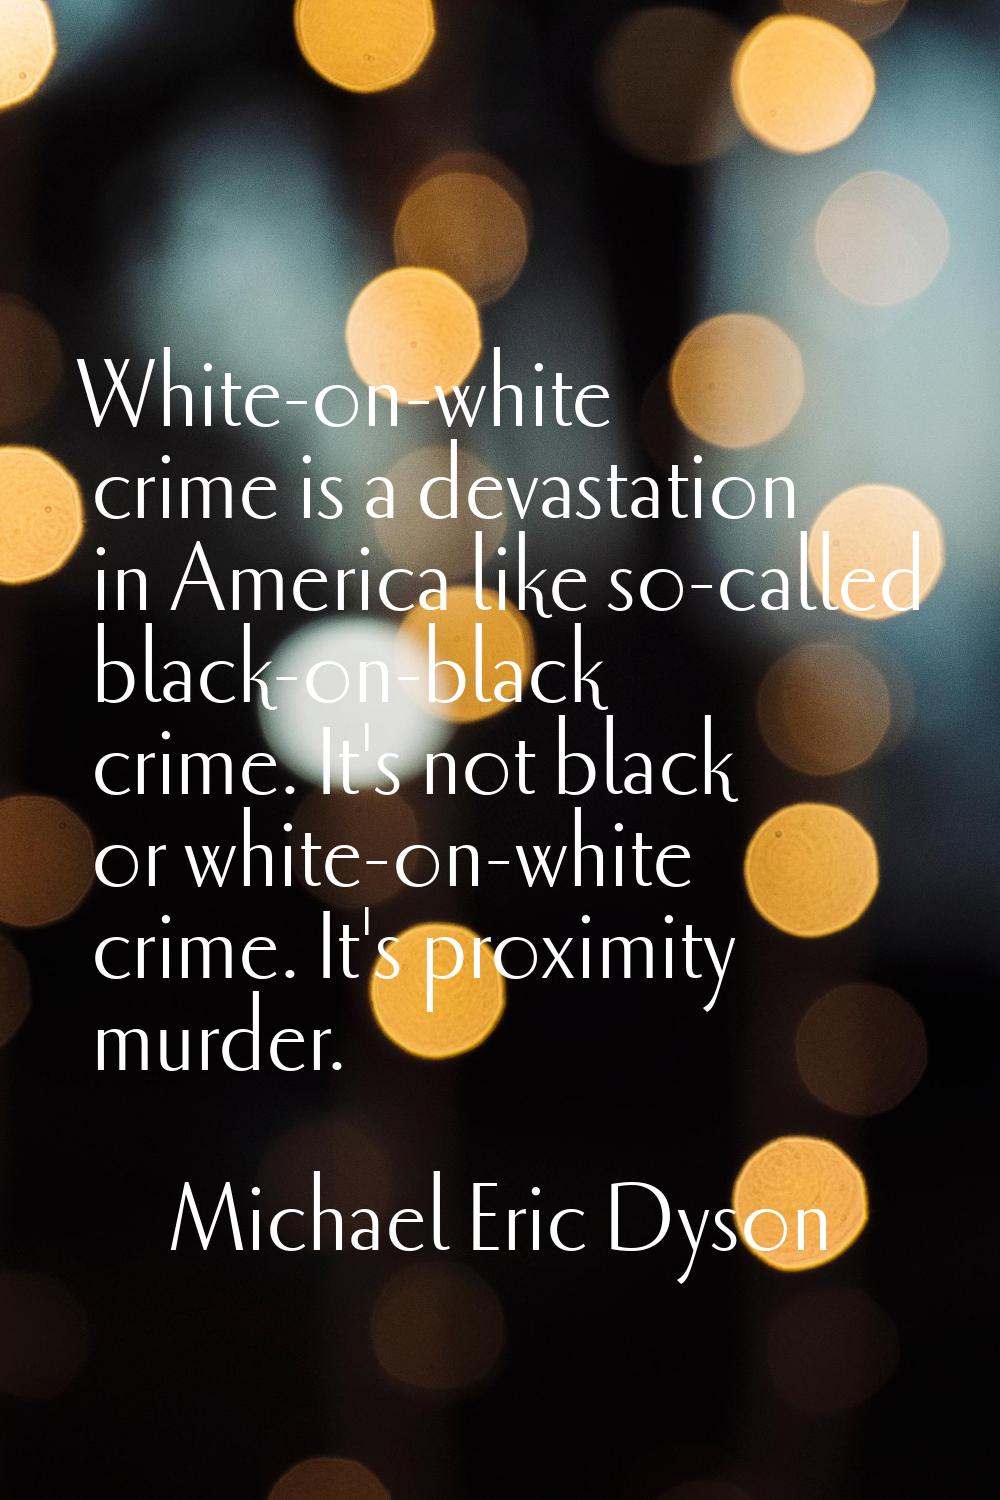 White-on-white crime is a devastation in America like so-called black-on-black crime. It's not blac